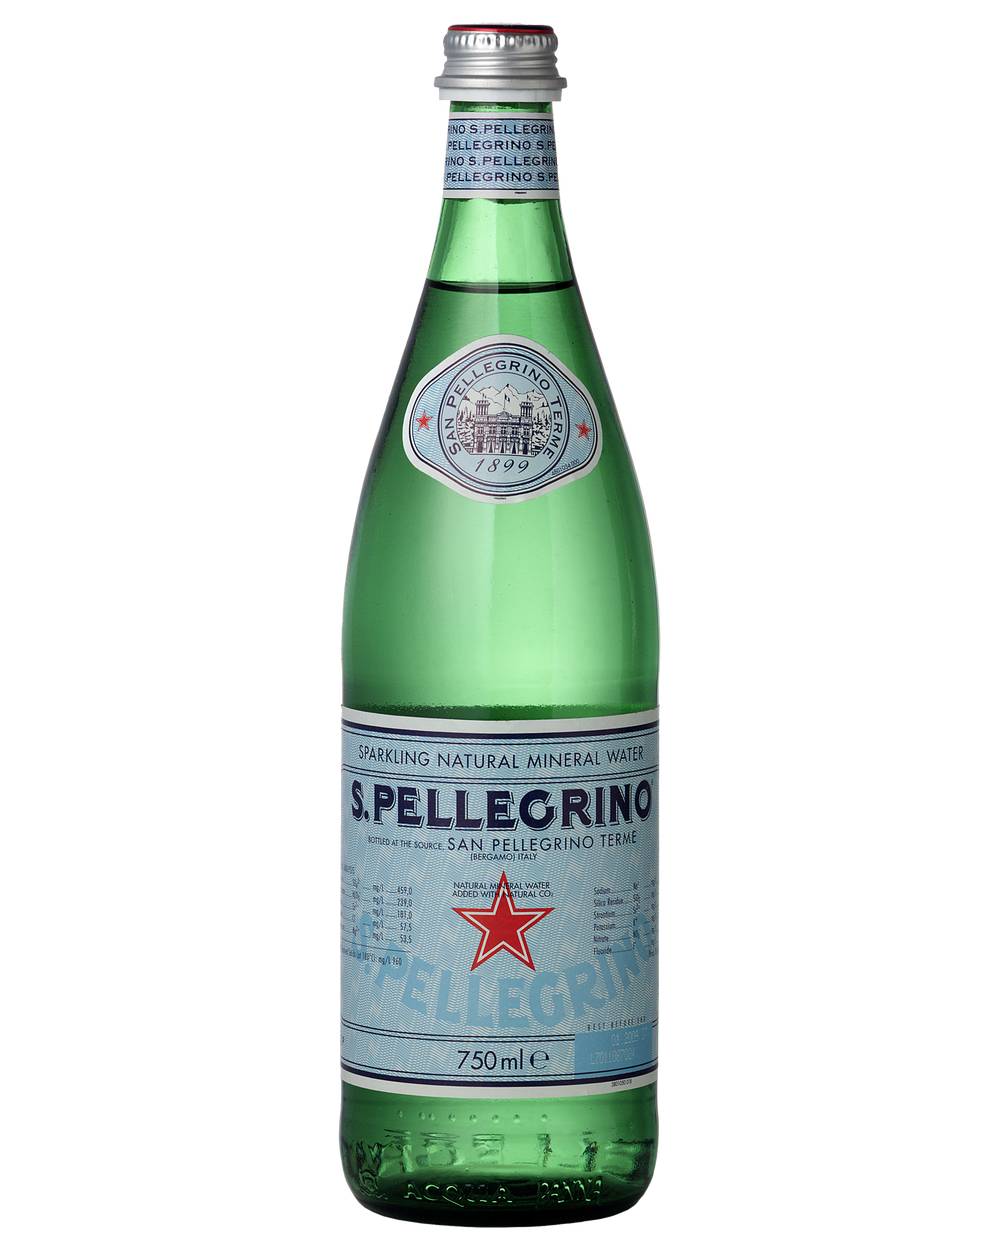 San Pellegrino Sparkling Natural Mineral Water Glass Bottles 750mL